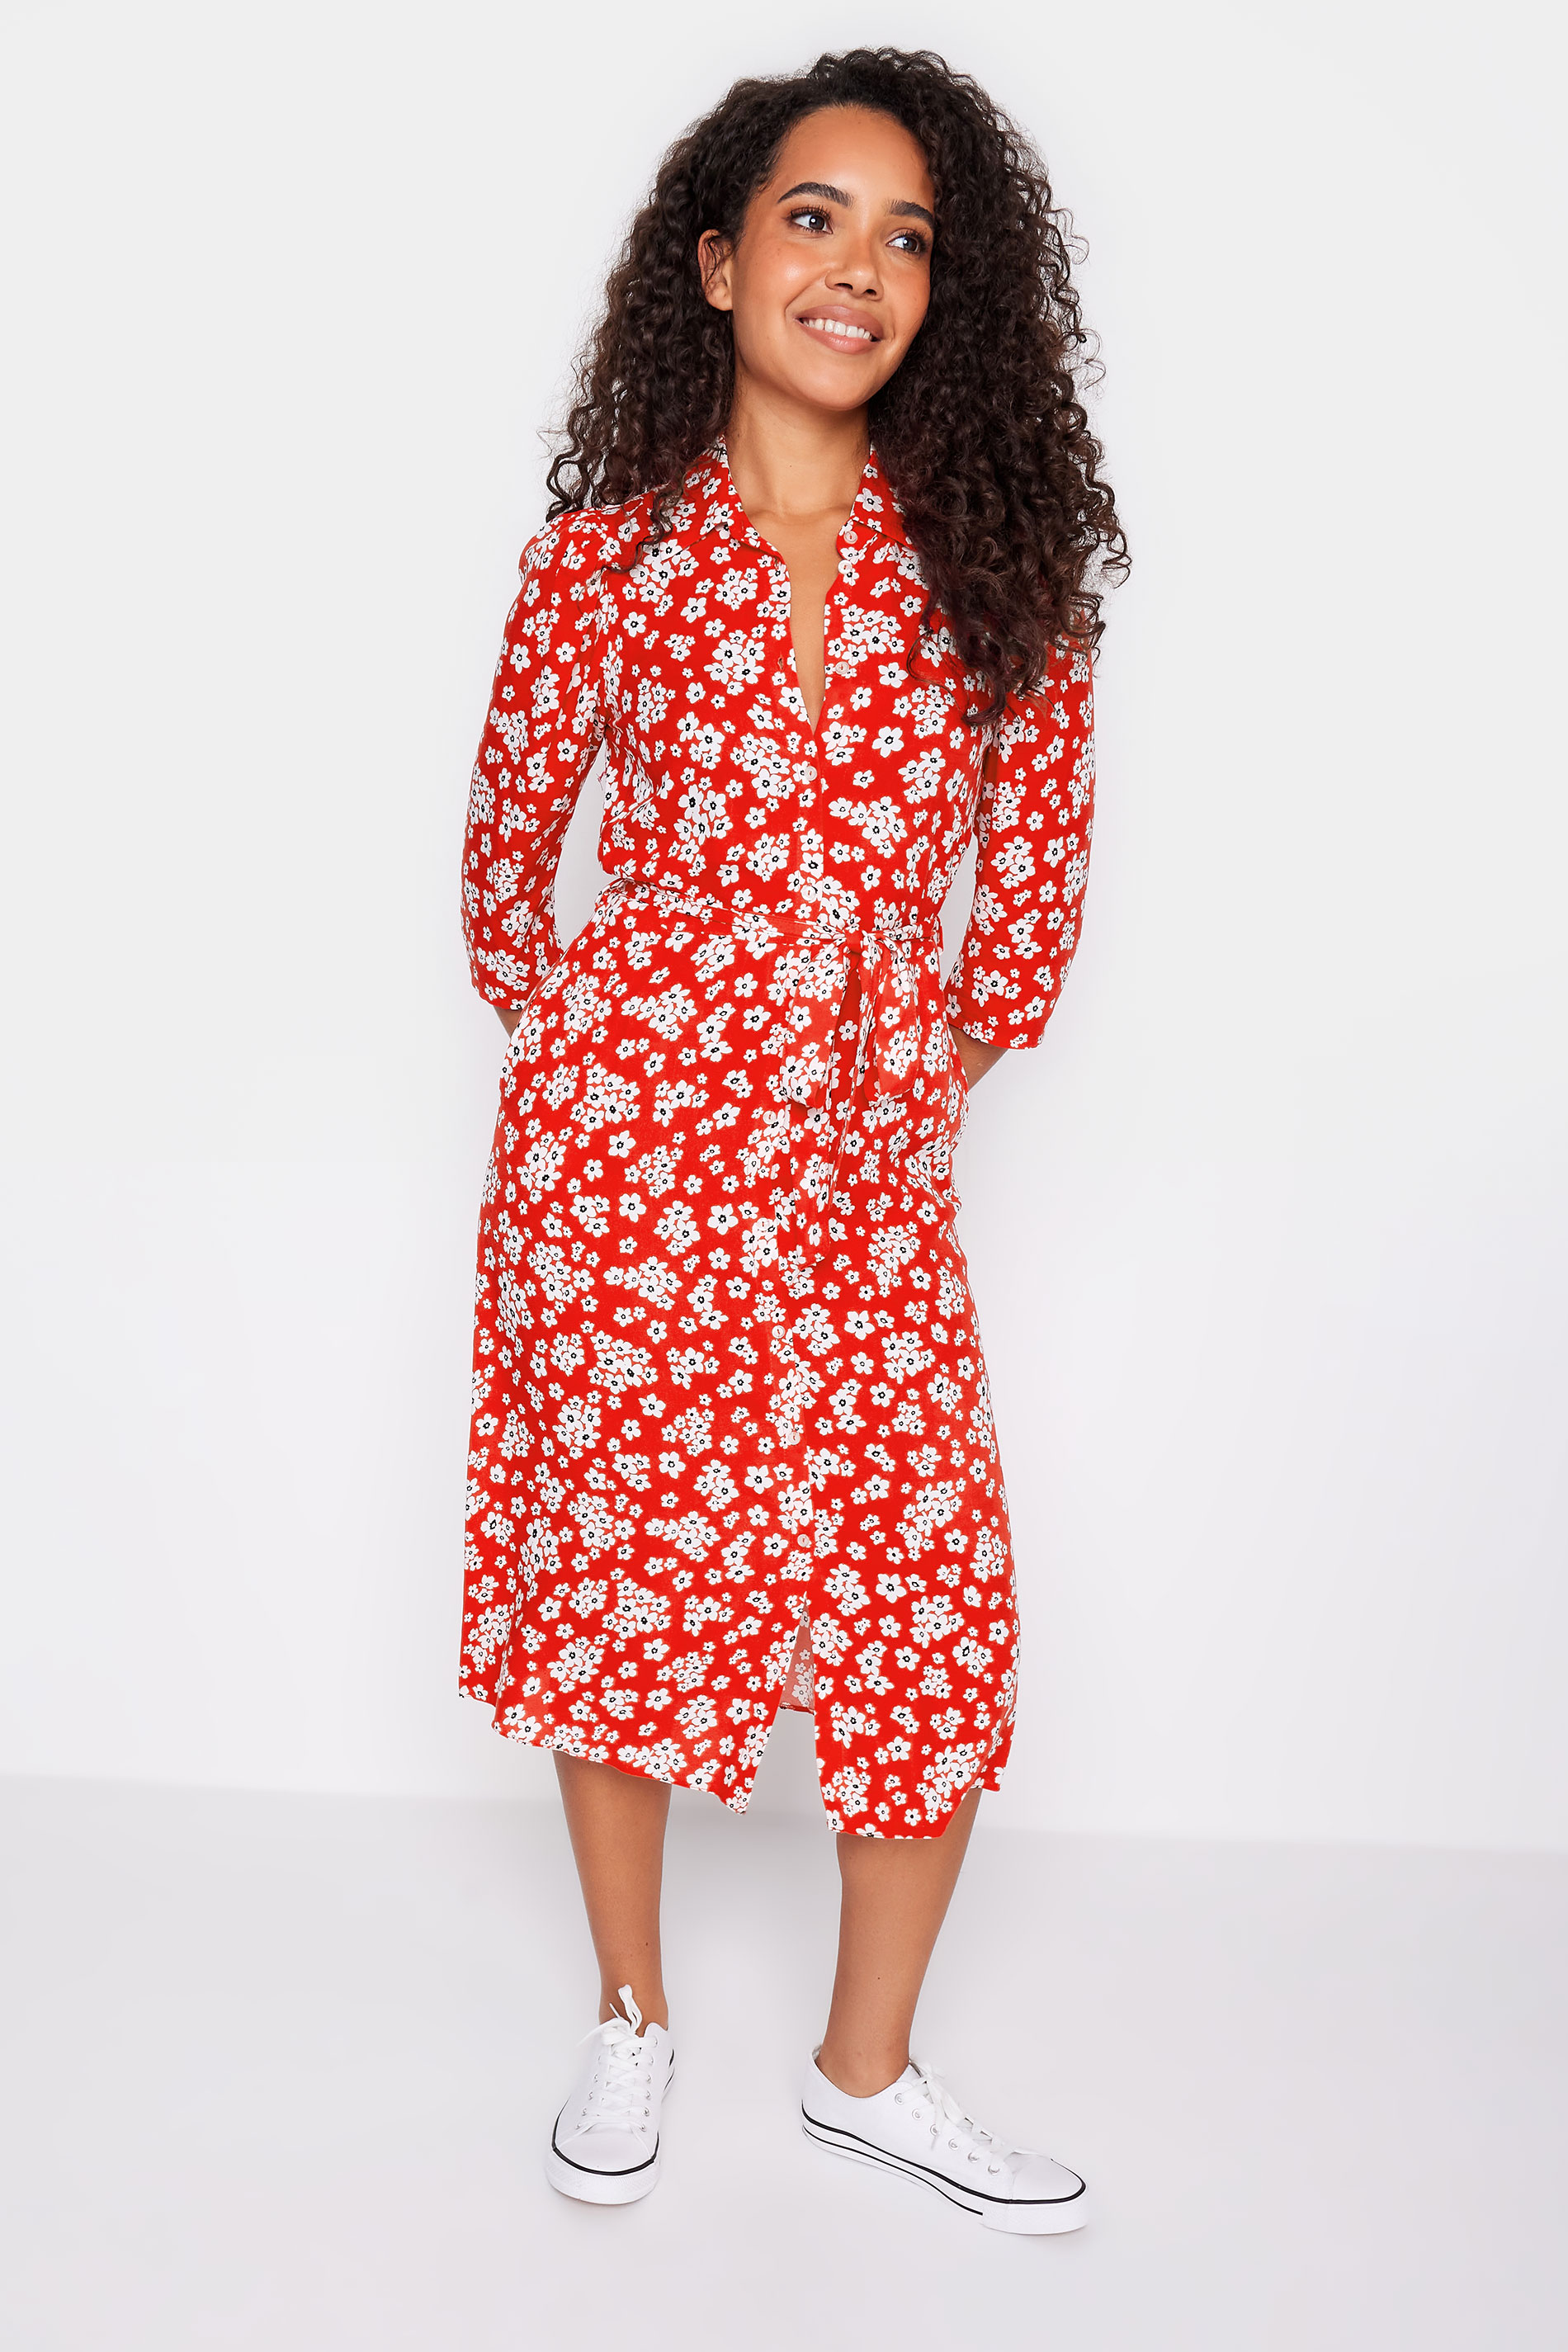 M&Co Red Floral Print Button Through Midi Dress | M&Co